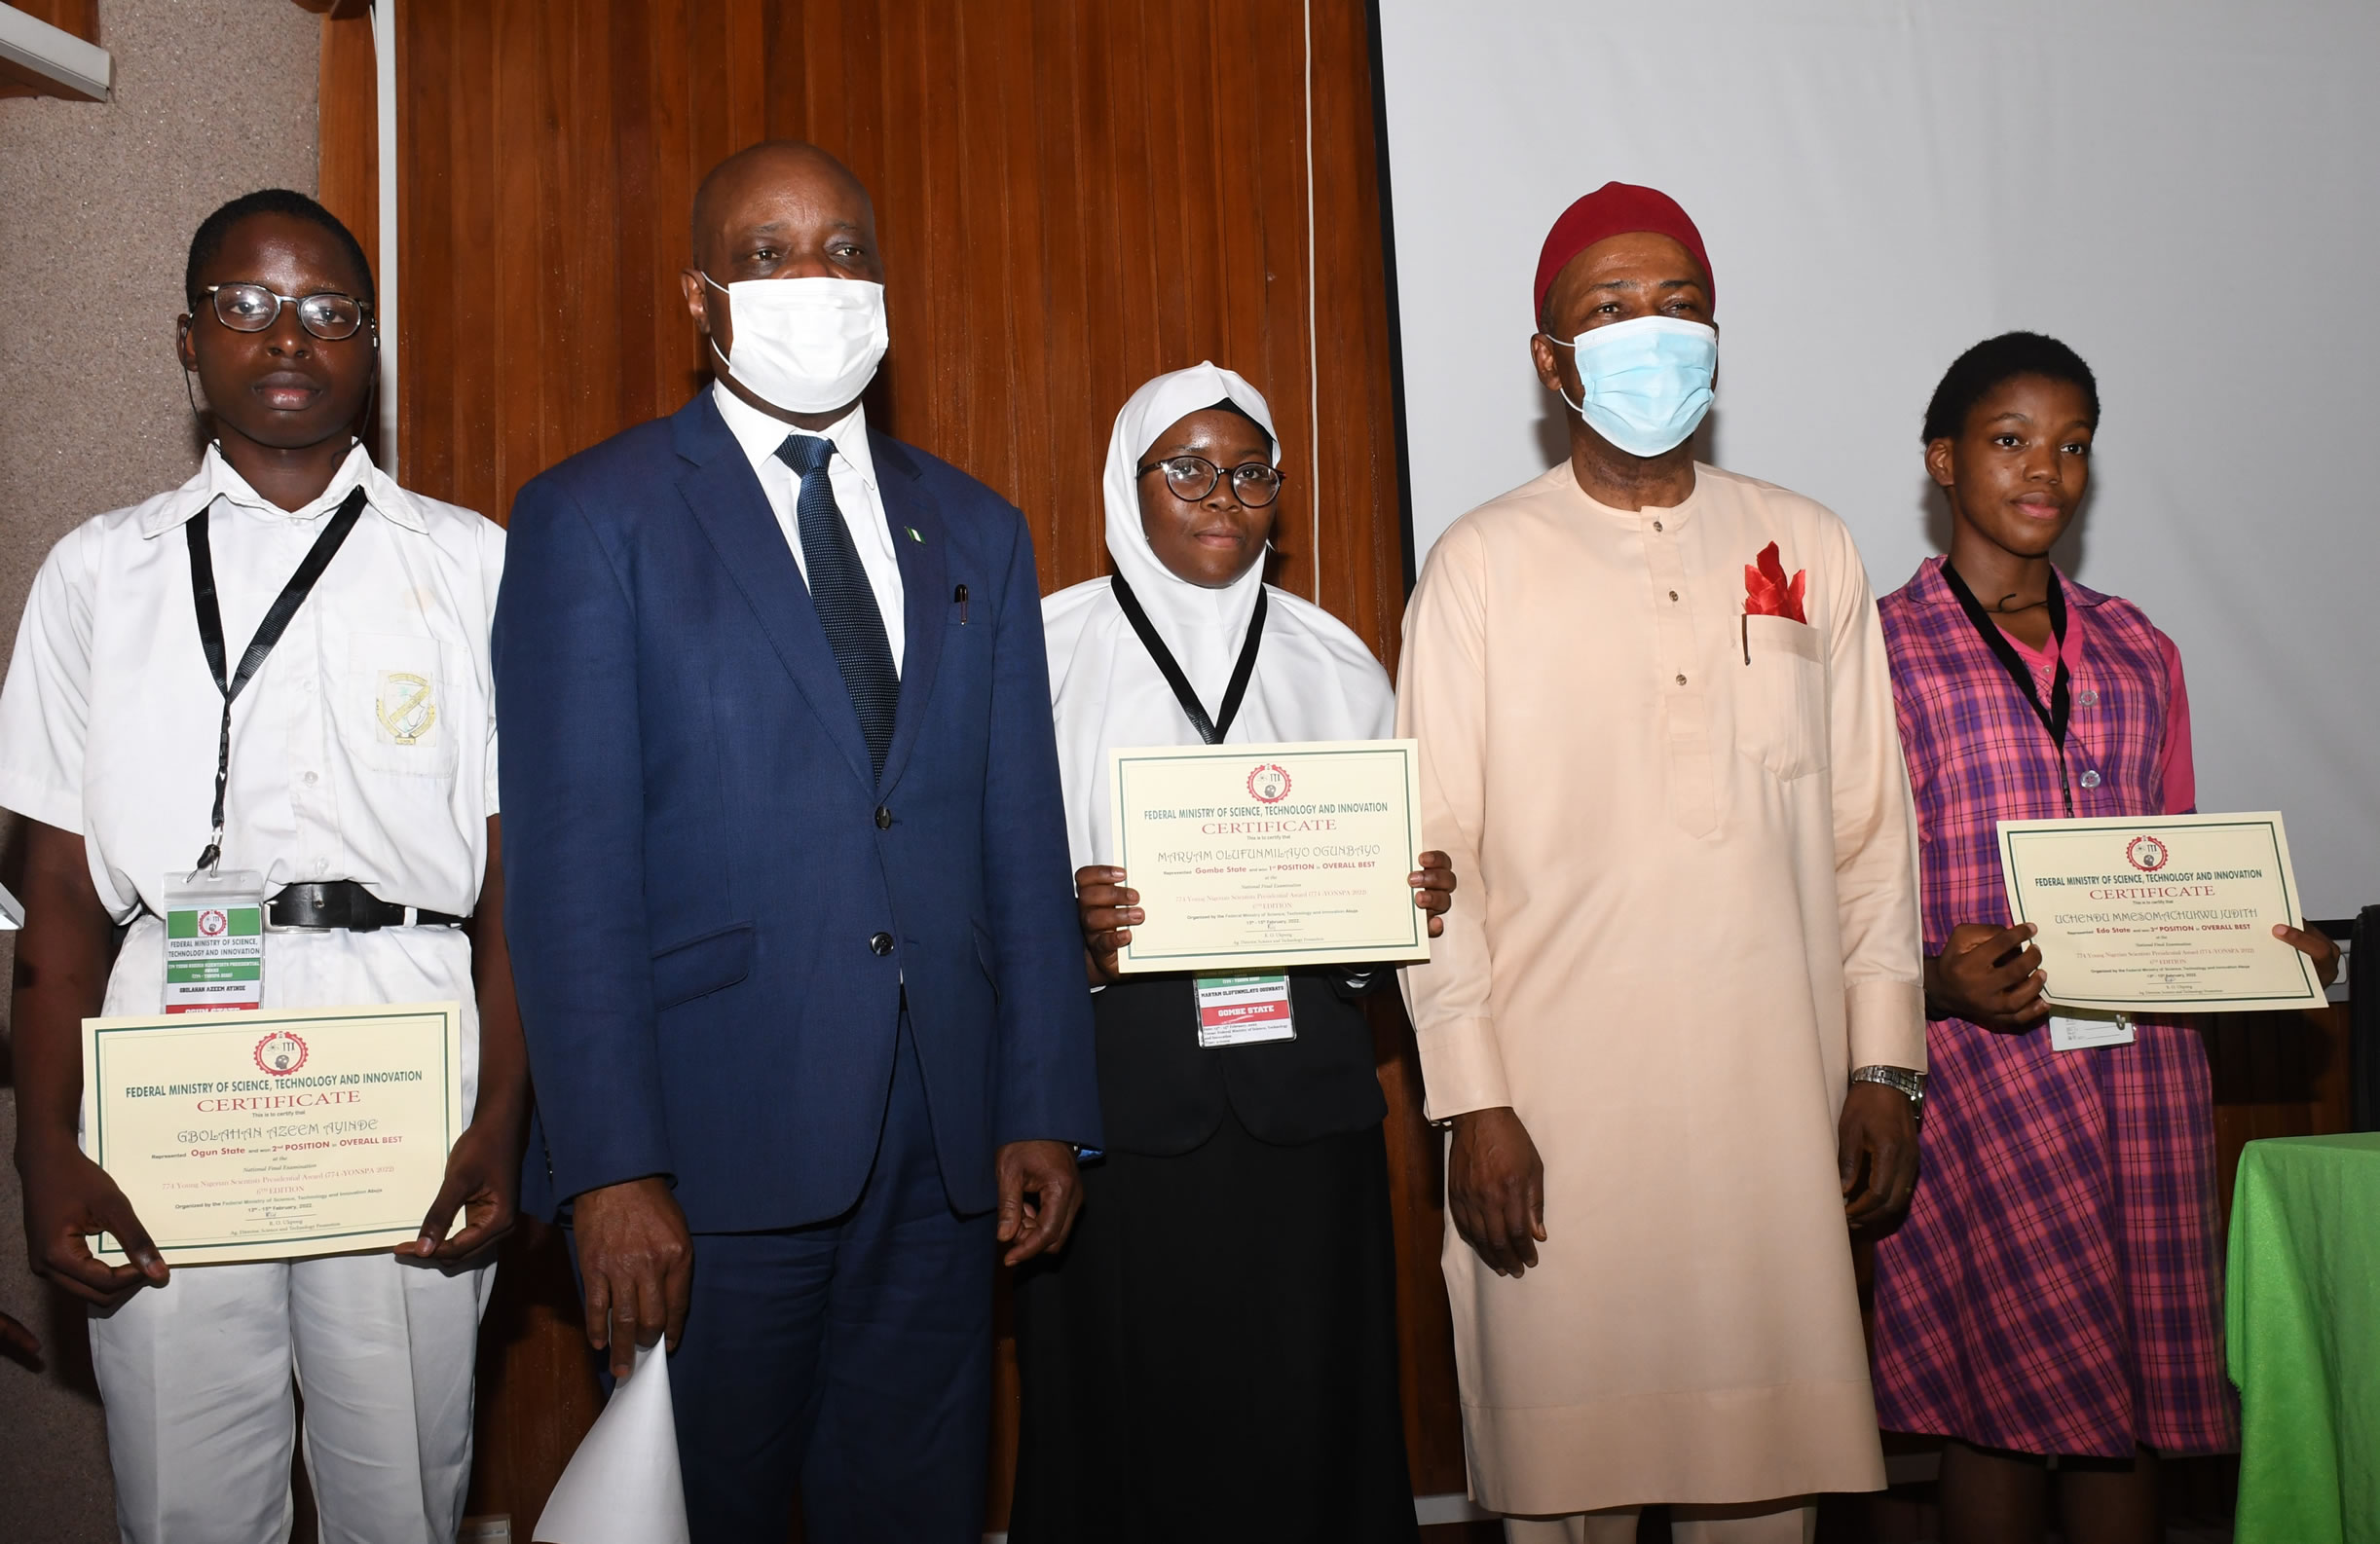 Young Scientist Awards: FG Awards Scholarship, Tasks Winners on Nigeria’s Development